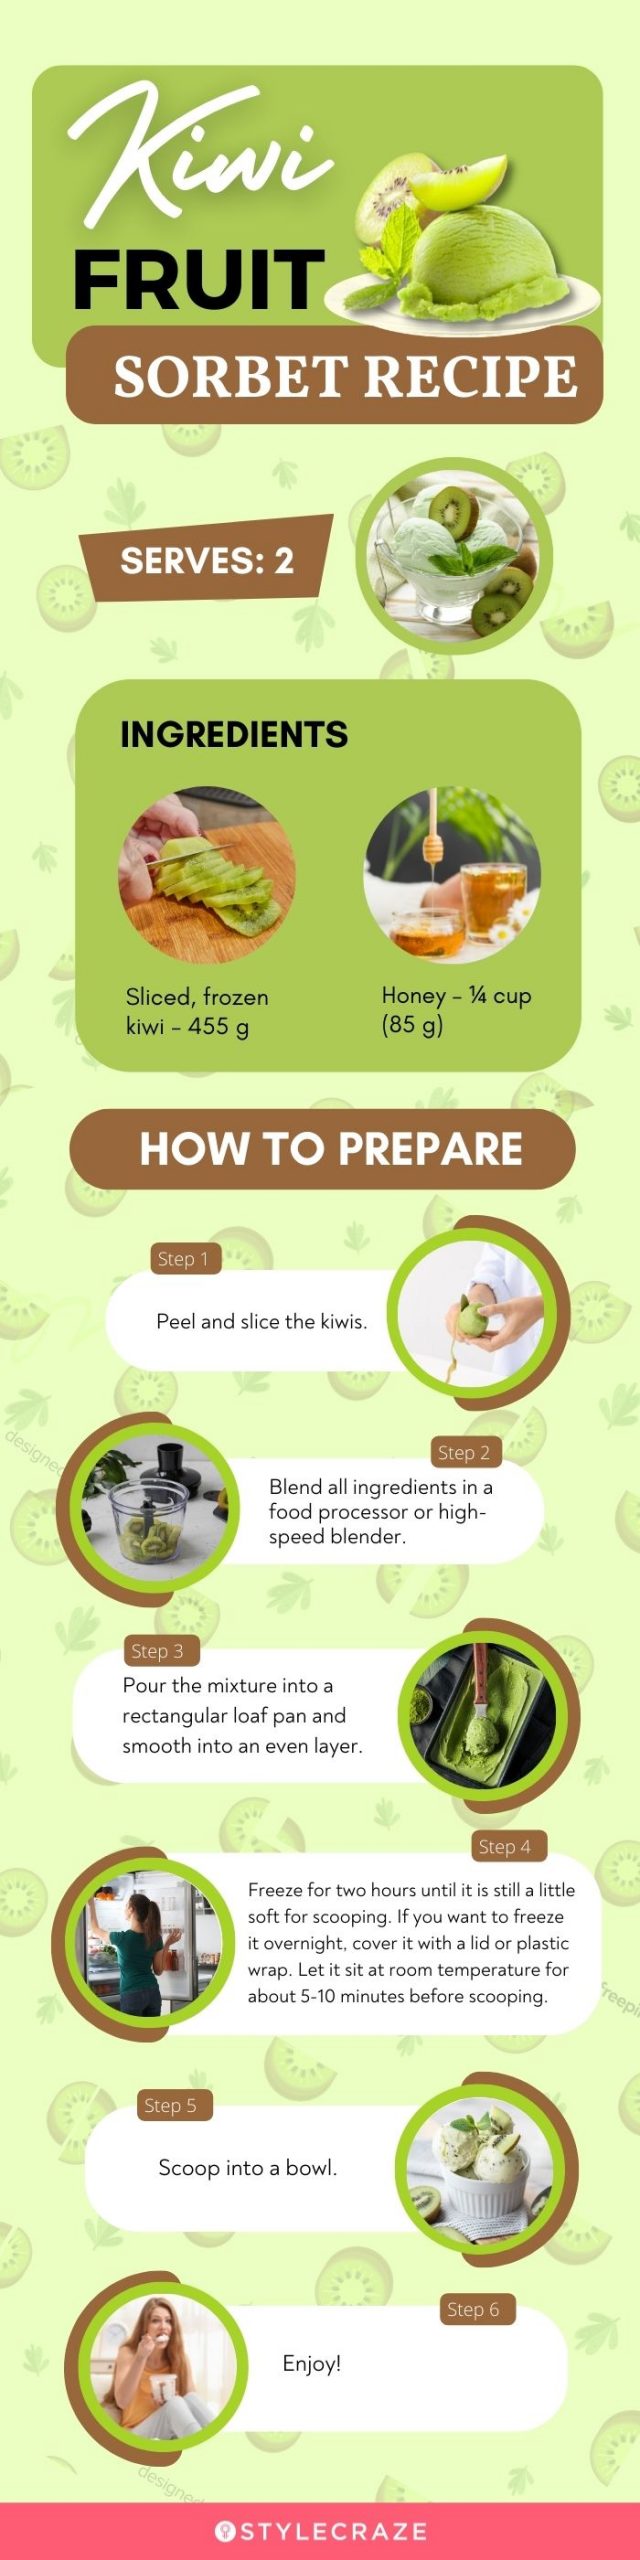 kiwi fruit sorbet recipe [infographic]